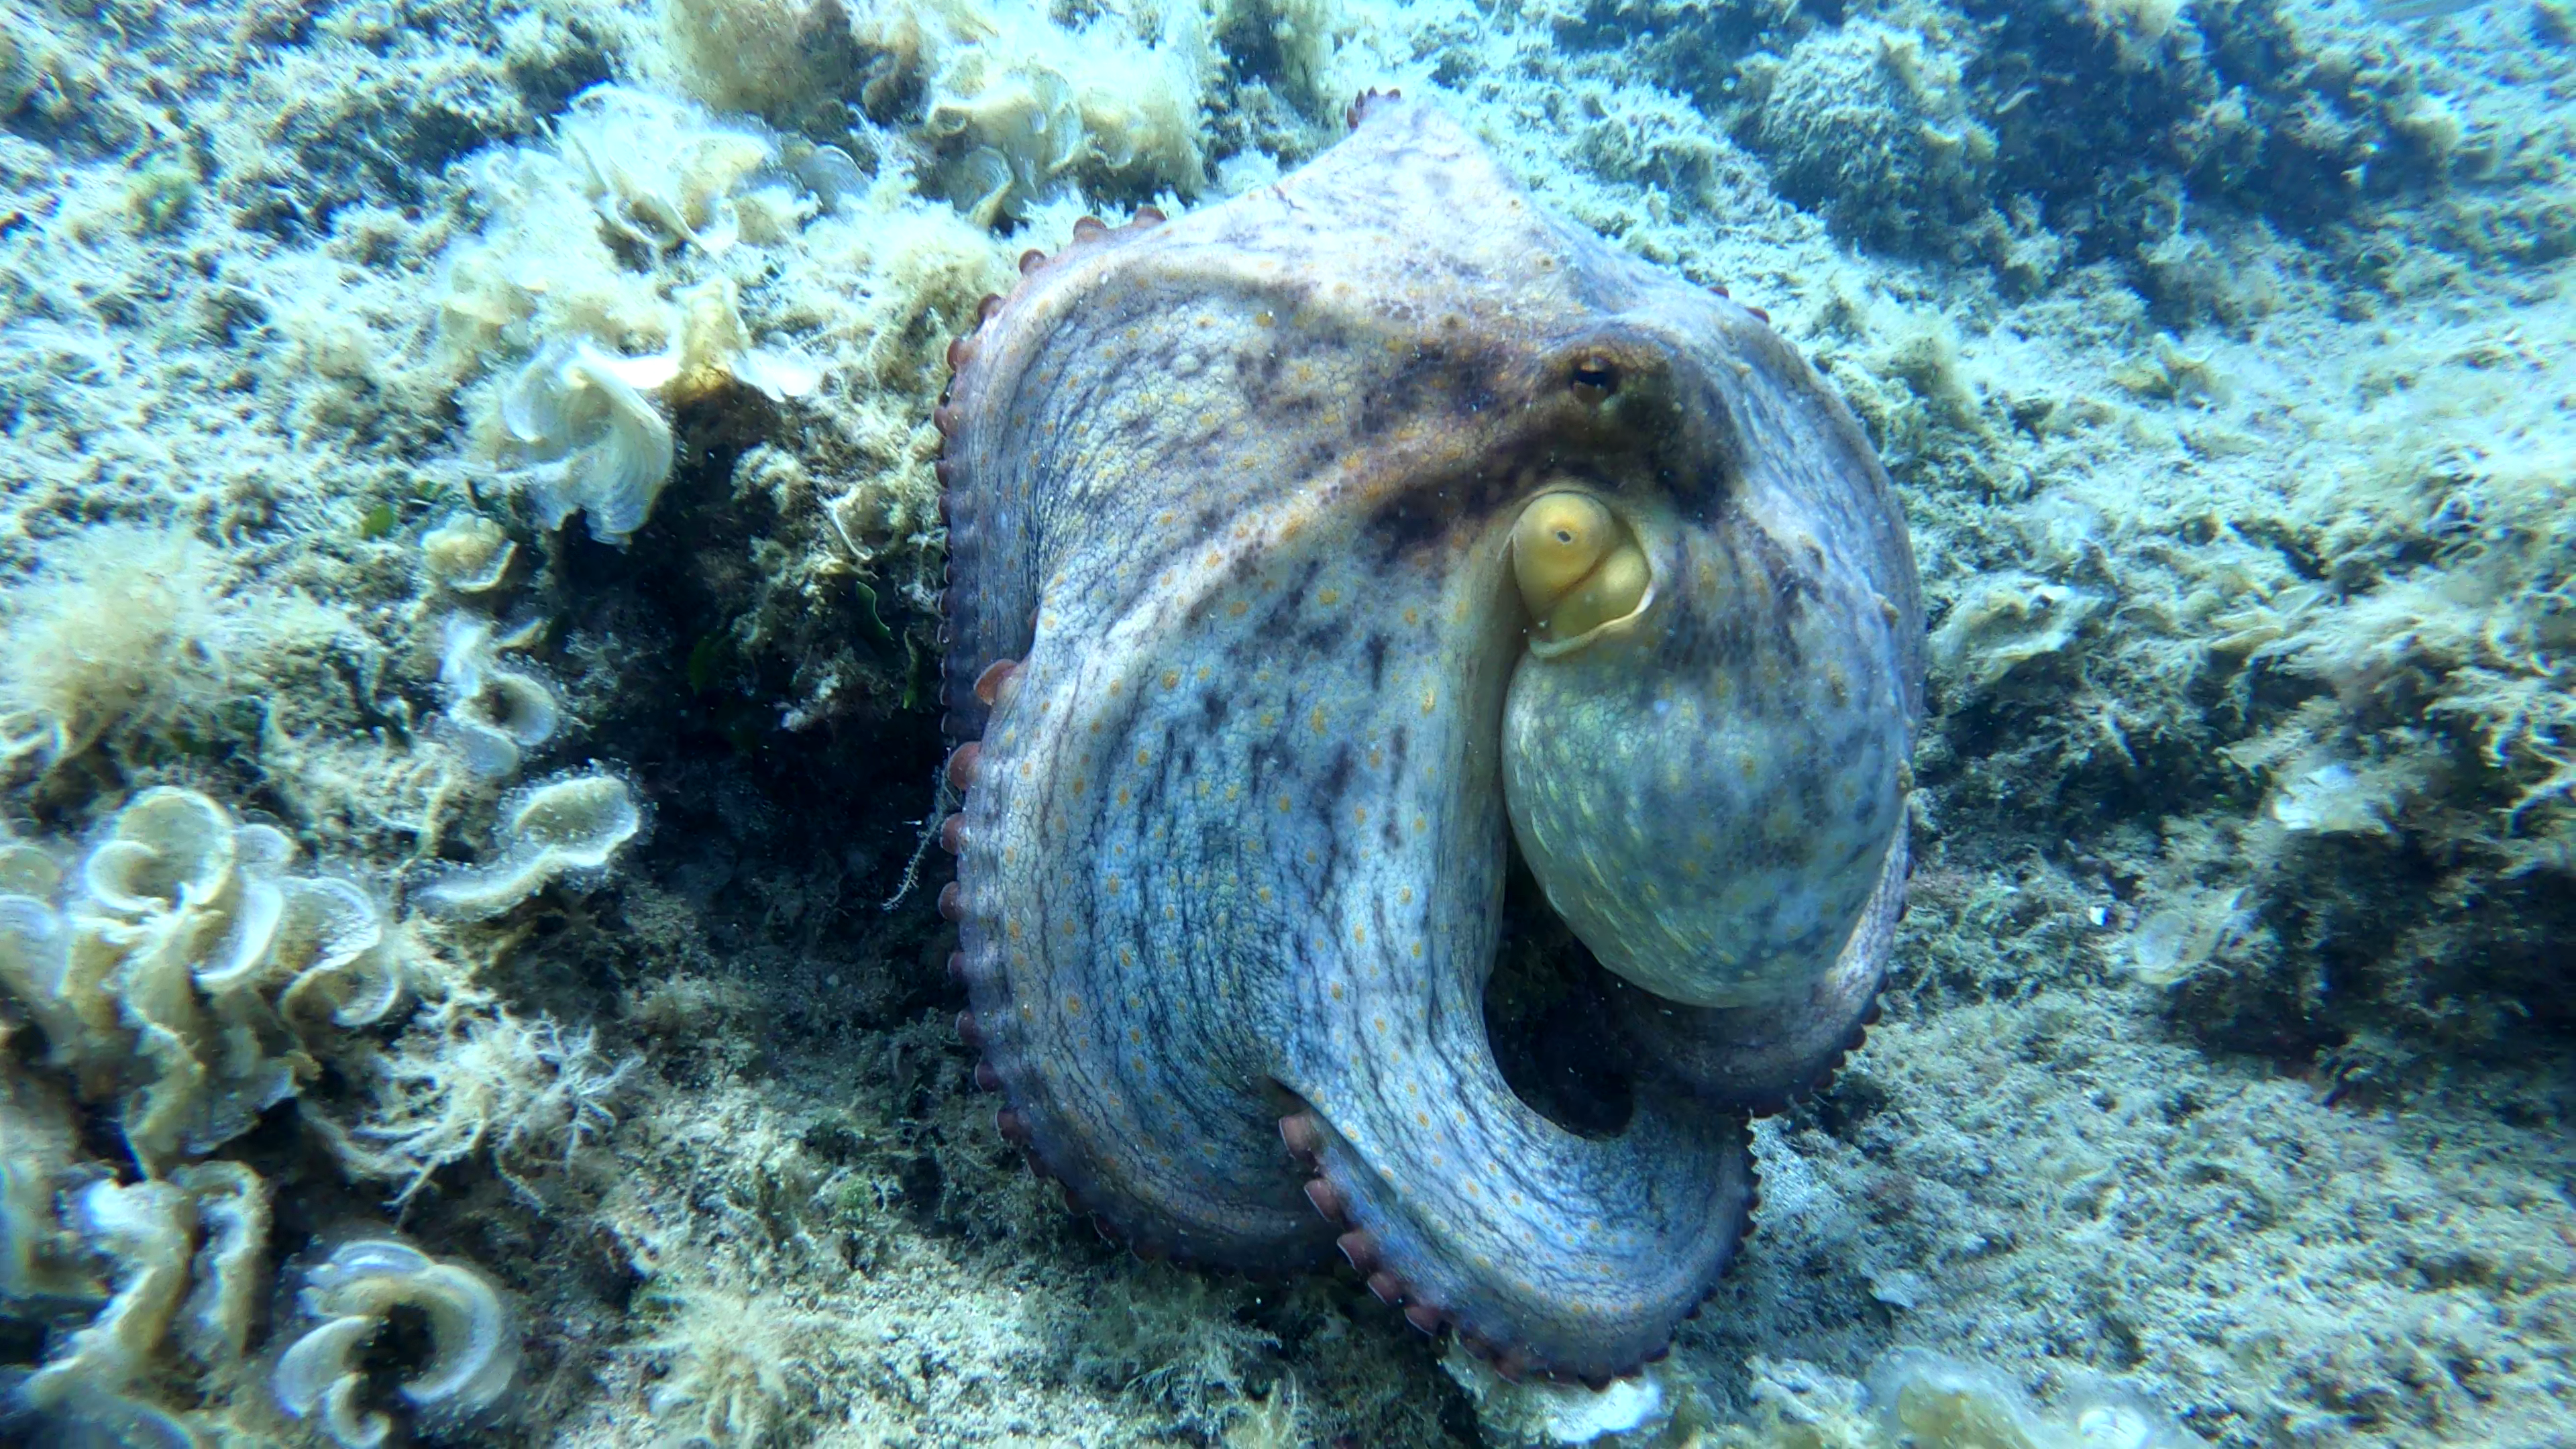 Common Octopus - Polpo - Octopus vulgaris - www.intotheblue.it